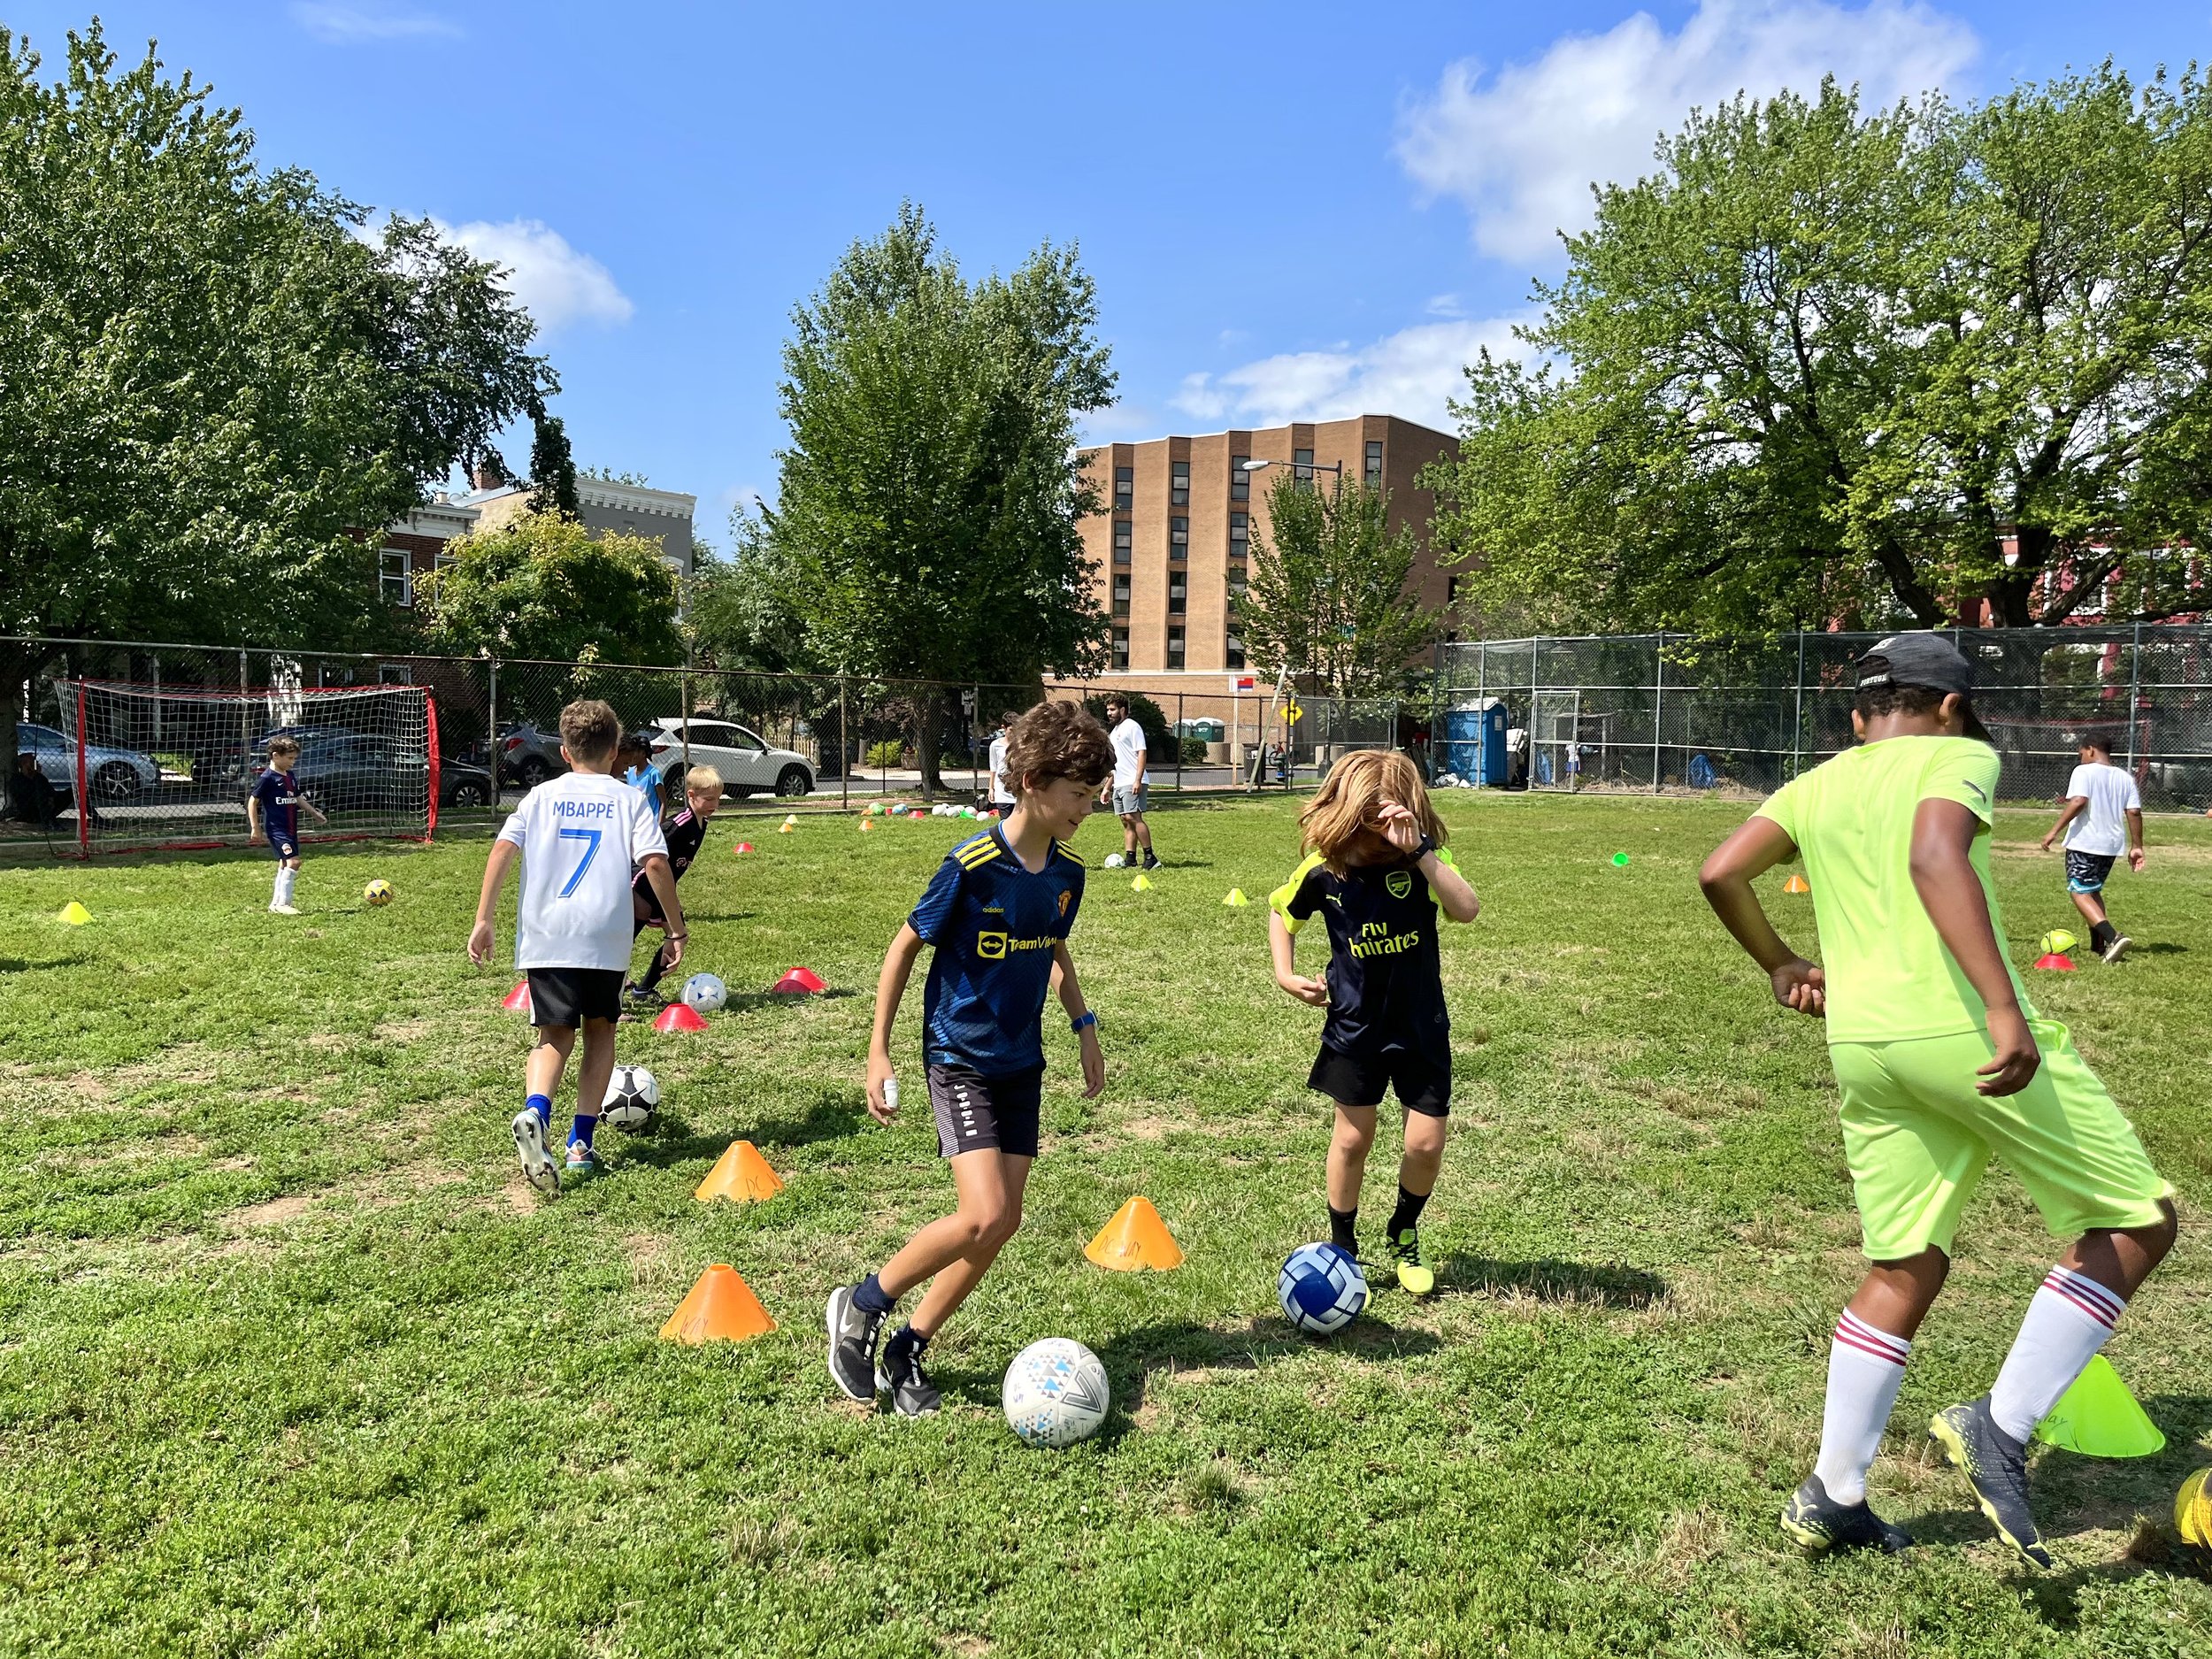 Dc-way-soccer-club-for-kids-in-washington-dc-summer-camp-at-tyler-elementary-school- 8563.jpeg